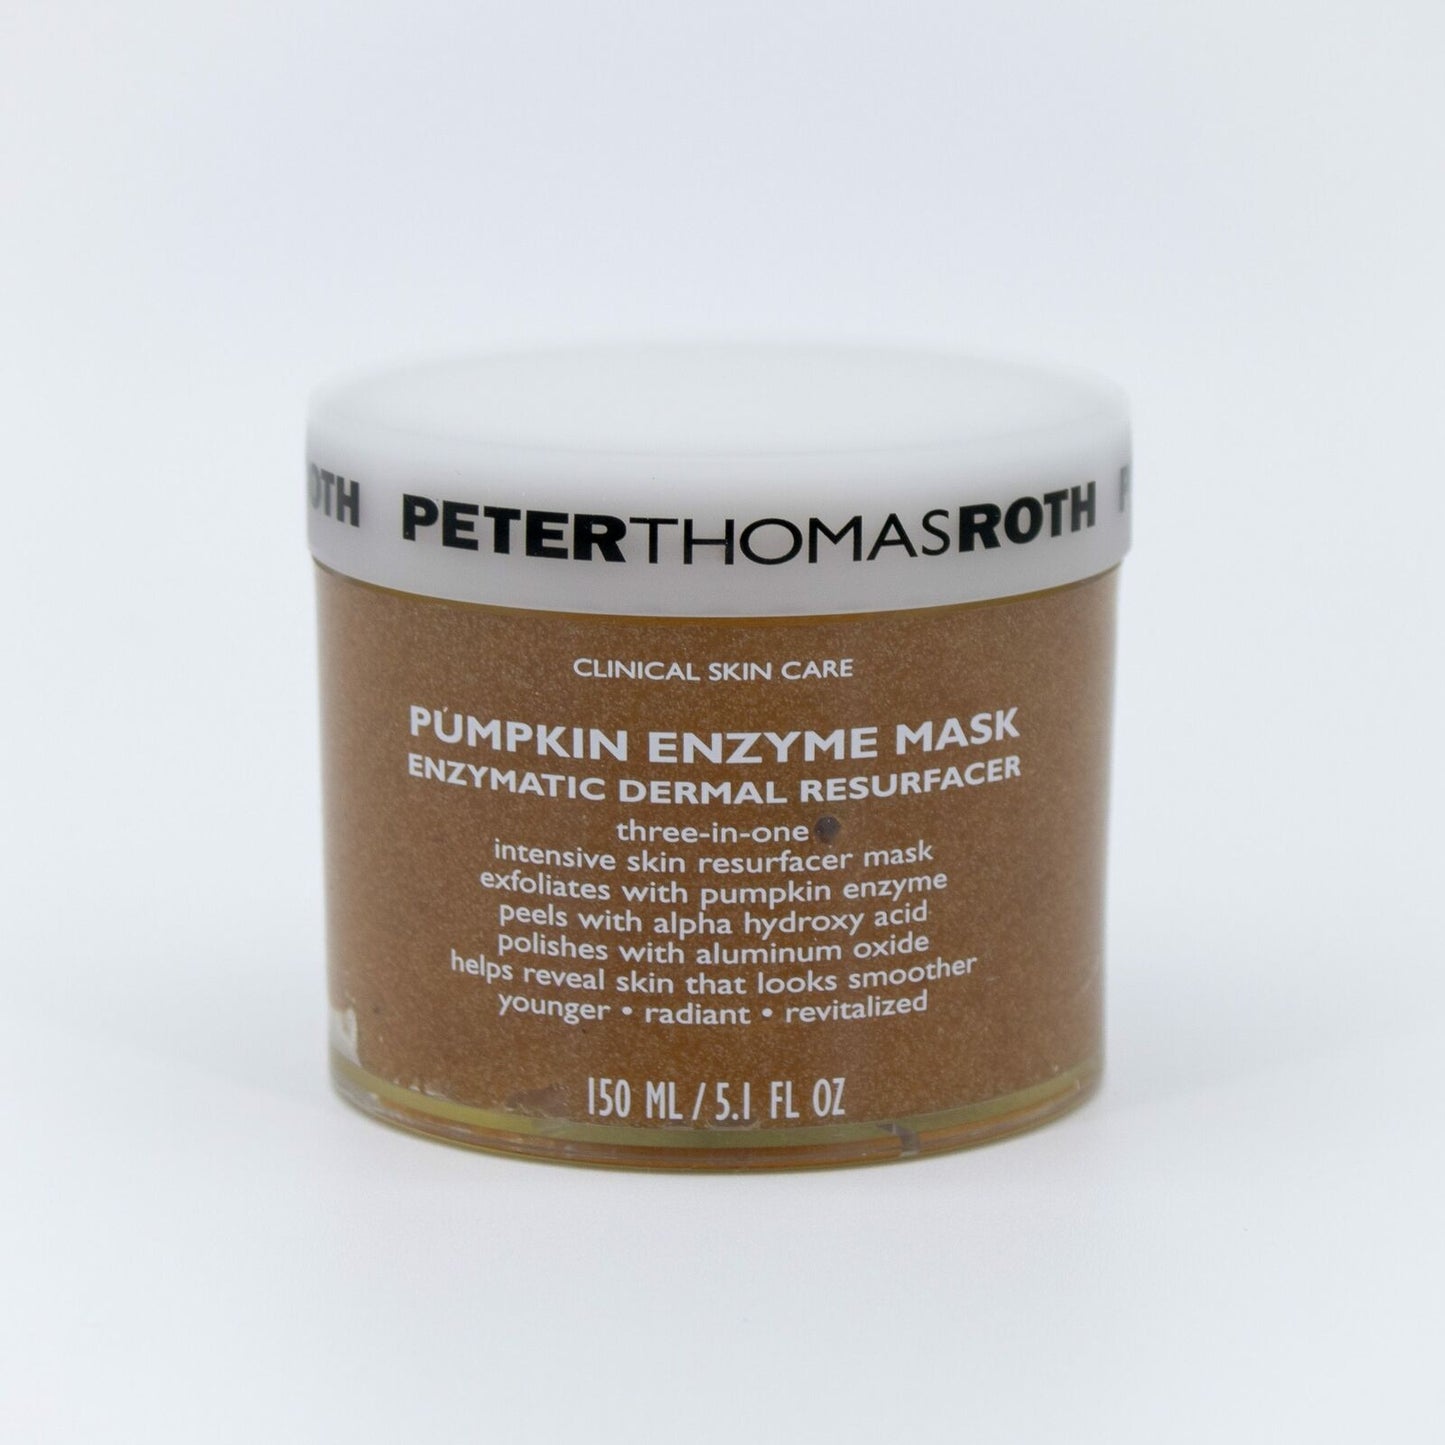 PETERTHOMASROTH Pumpkin Enzyme Mask 5.1oz - Small Amount Missing